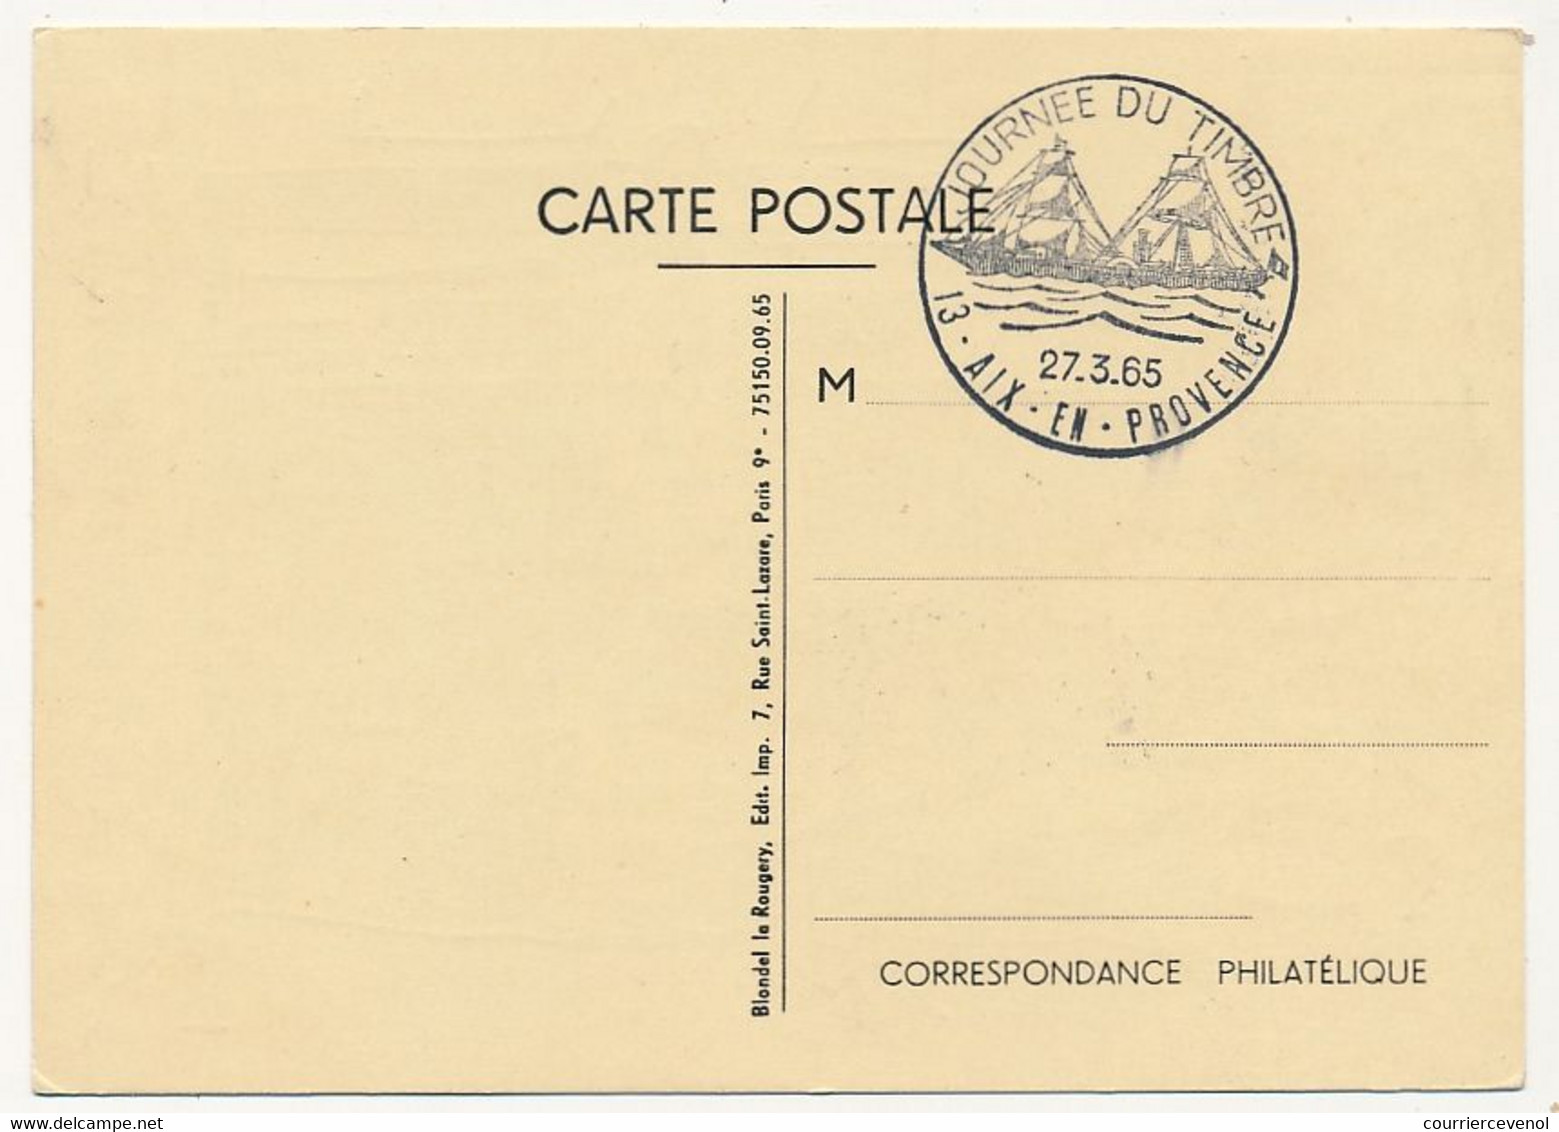 FRANCE - Carte Locale - Journée Du Timbre 1965 (La Guienne) - 13 AIX EN PROVENCE - 27 / 3 / 1965 - Giornata Del Francobollo